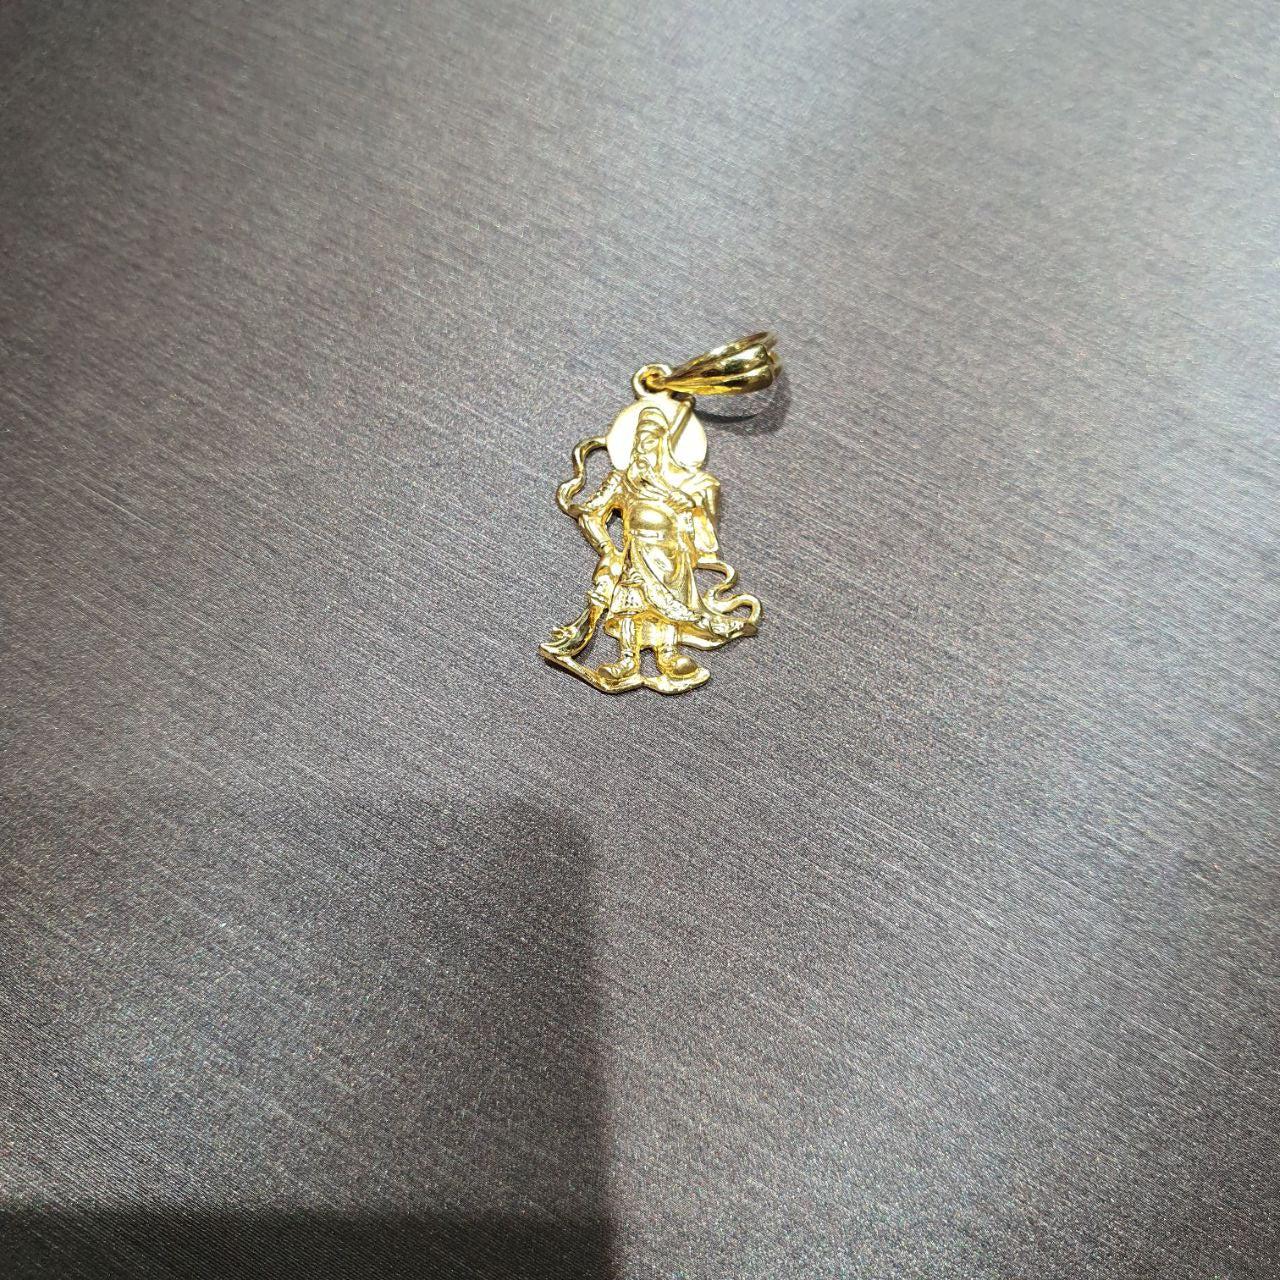 22k / 916 Gold Guan Gong Pendant-Charms & Pendants-Best Gold Shop